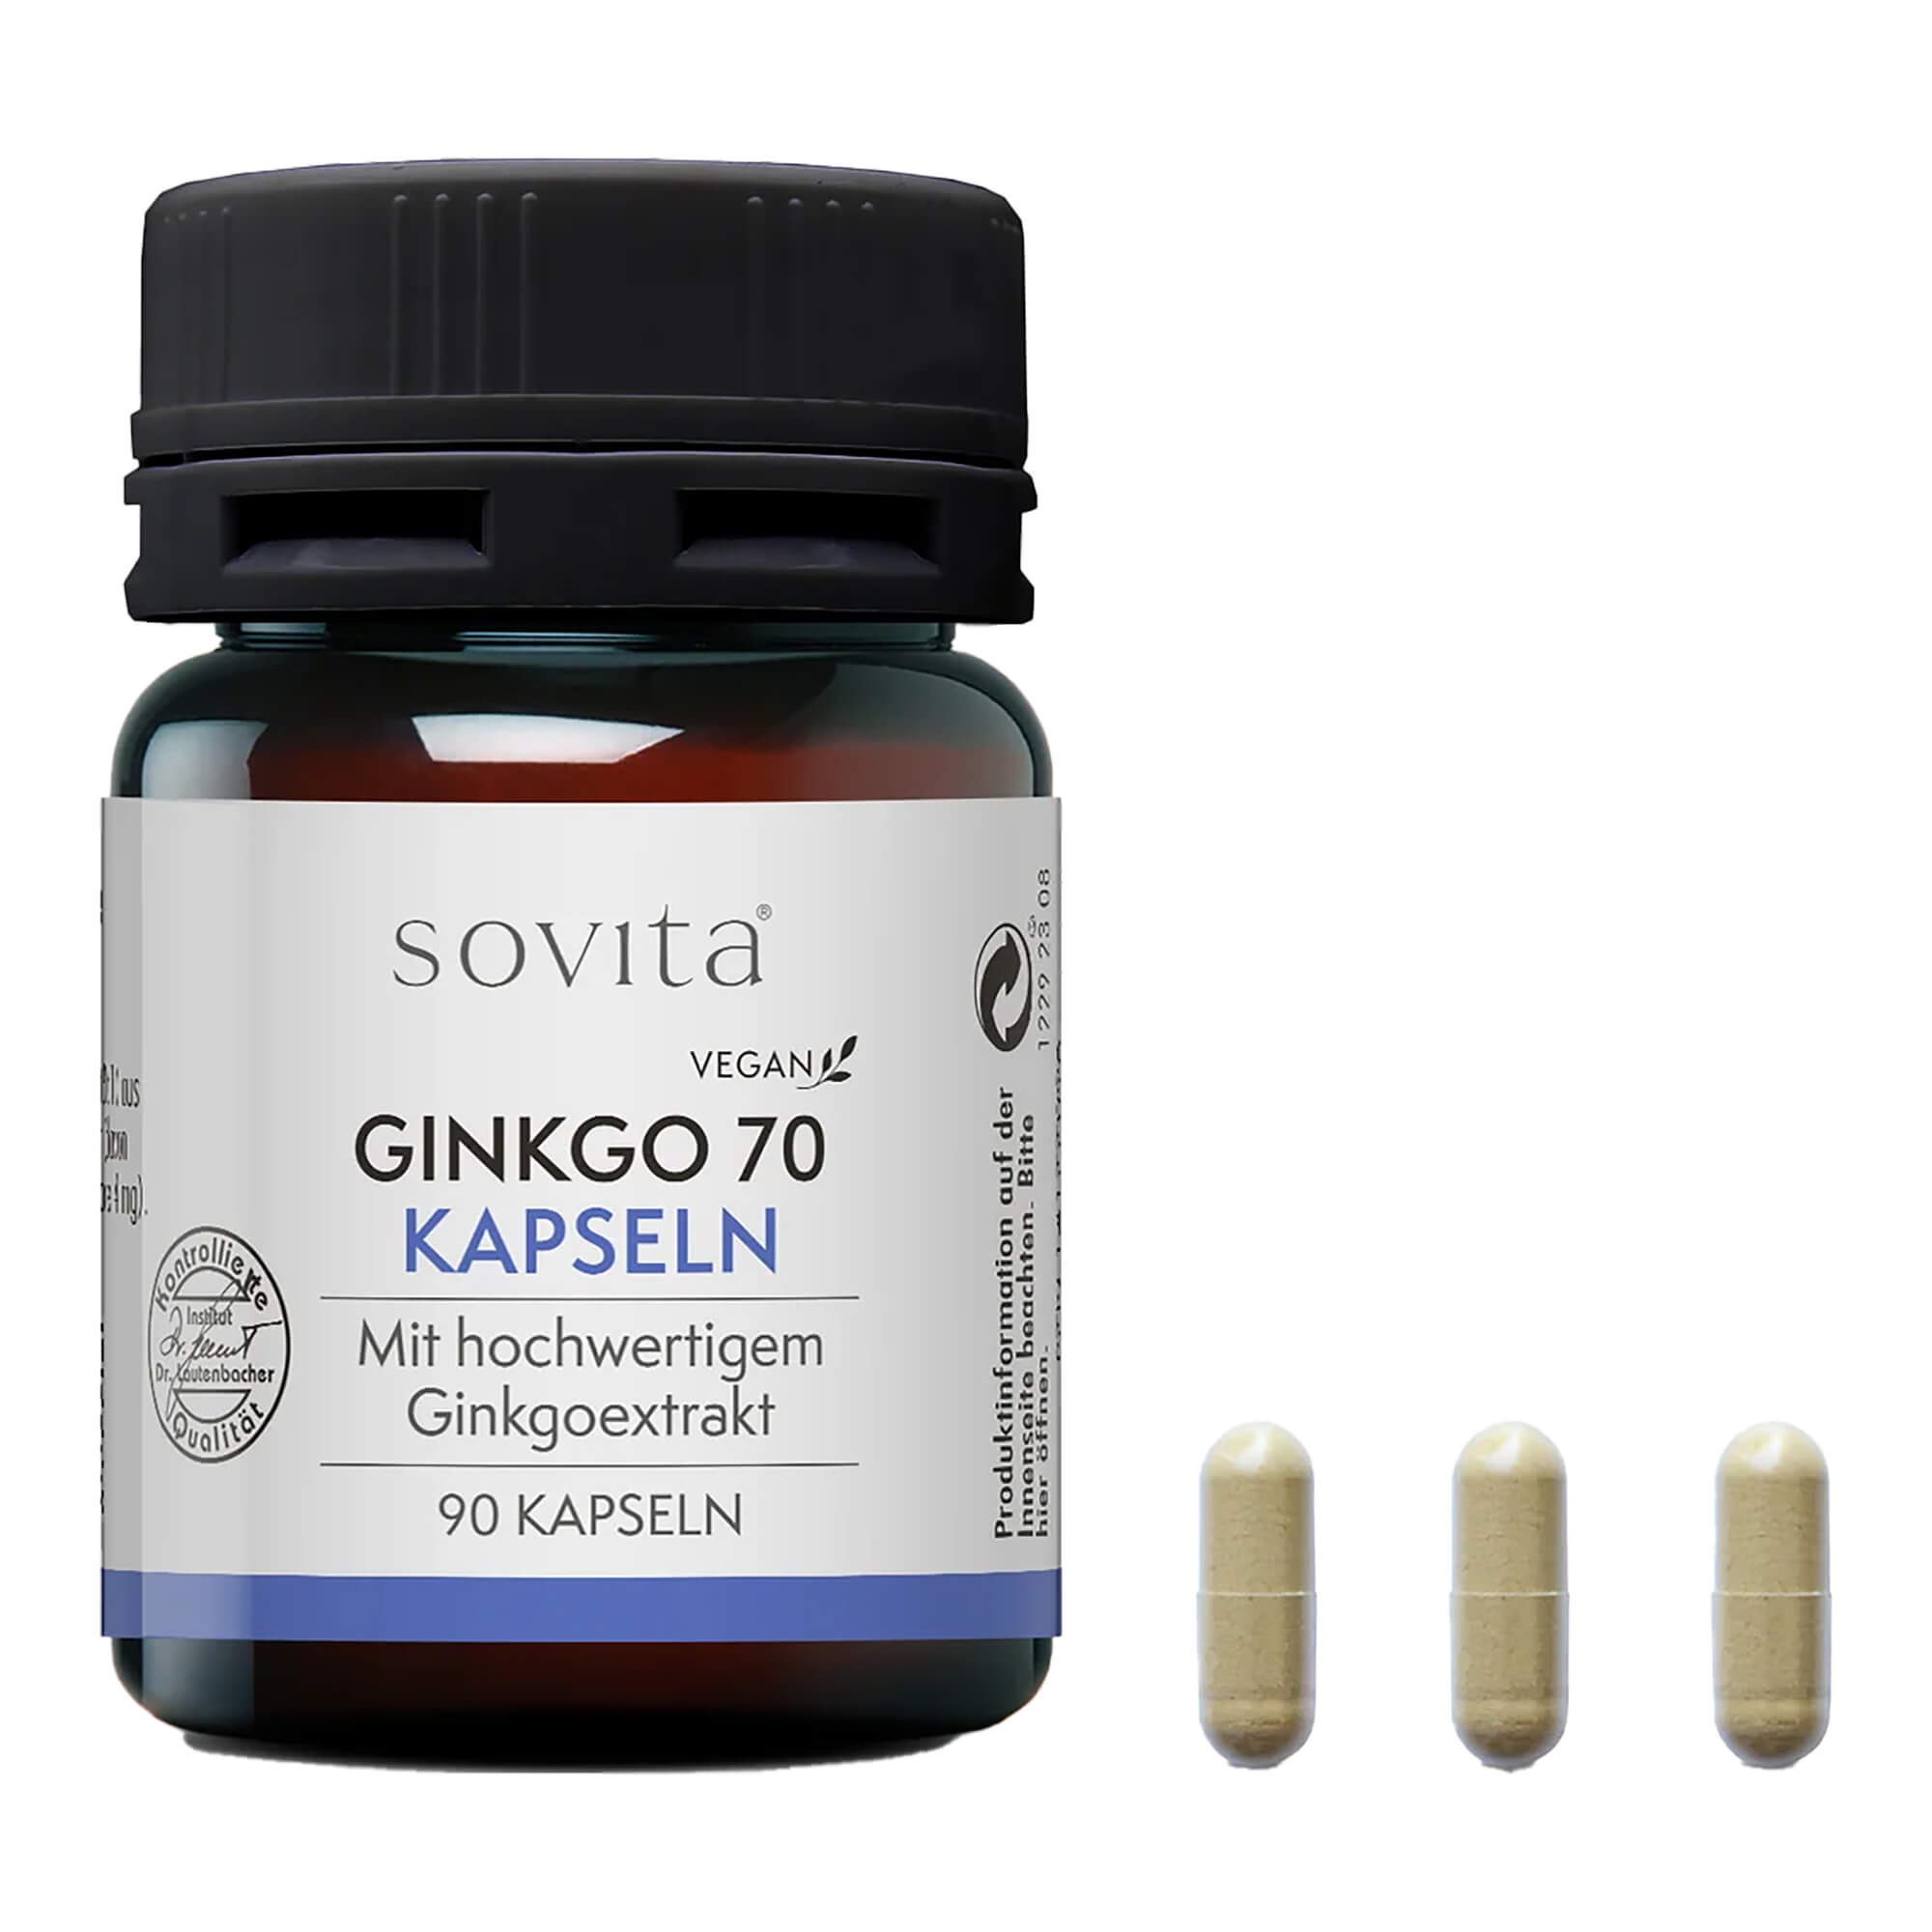 Nahrungsergänzungsmittel mit 70 mg Ginkgo biloba Trockenextrakt pro Kapsel.